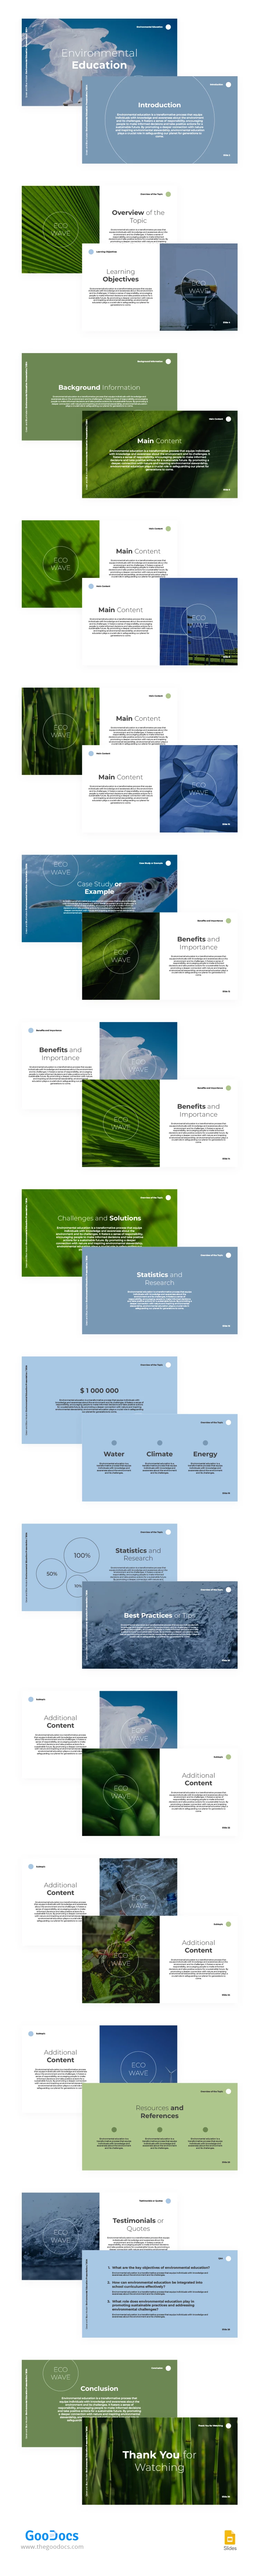 Grüne und blaue moderne Umweltbildung - free Google Docs Template - 10066989